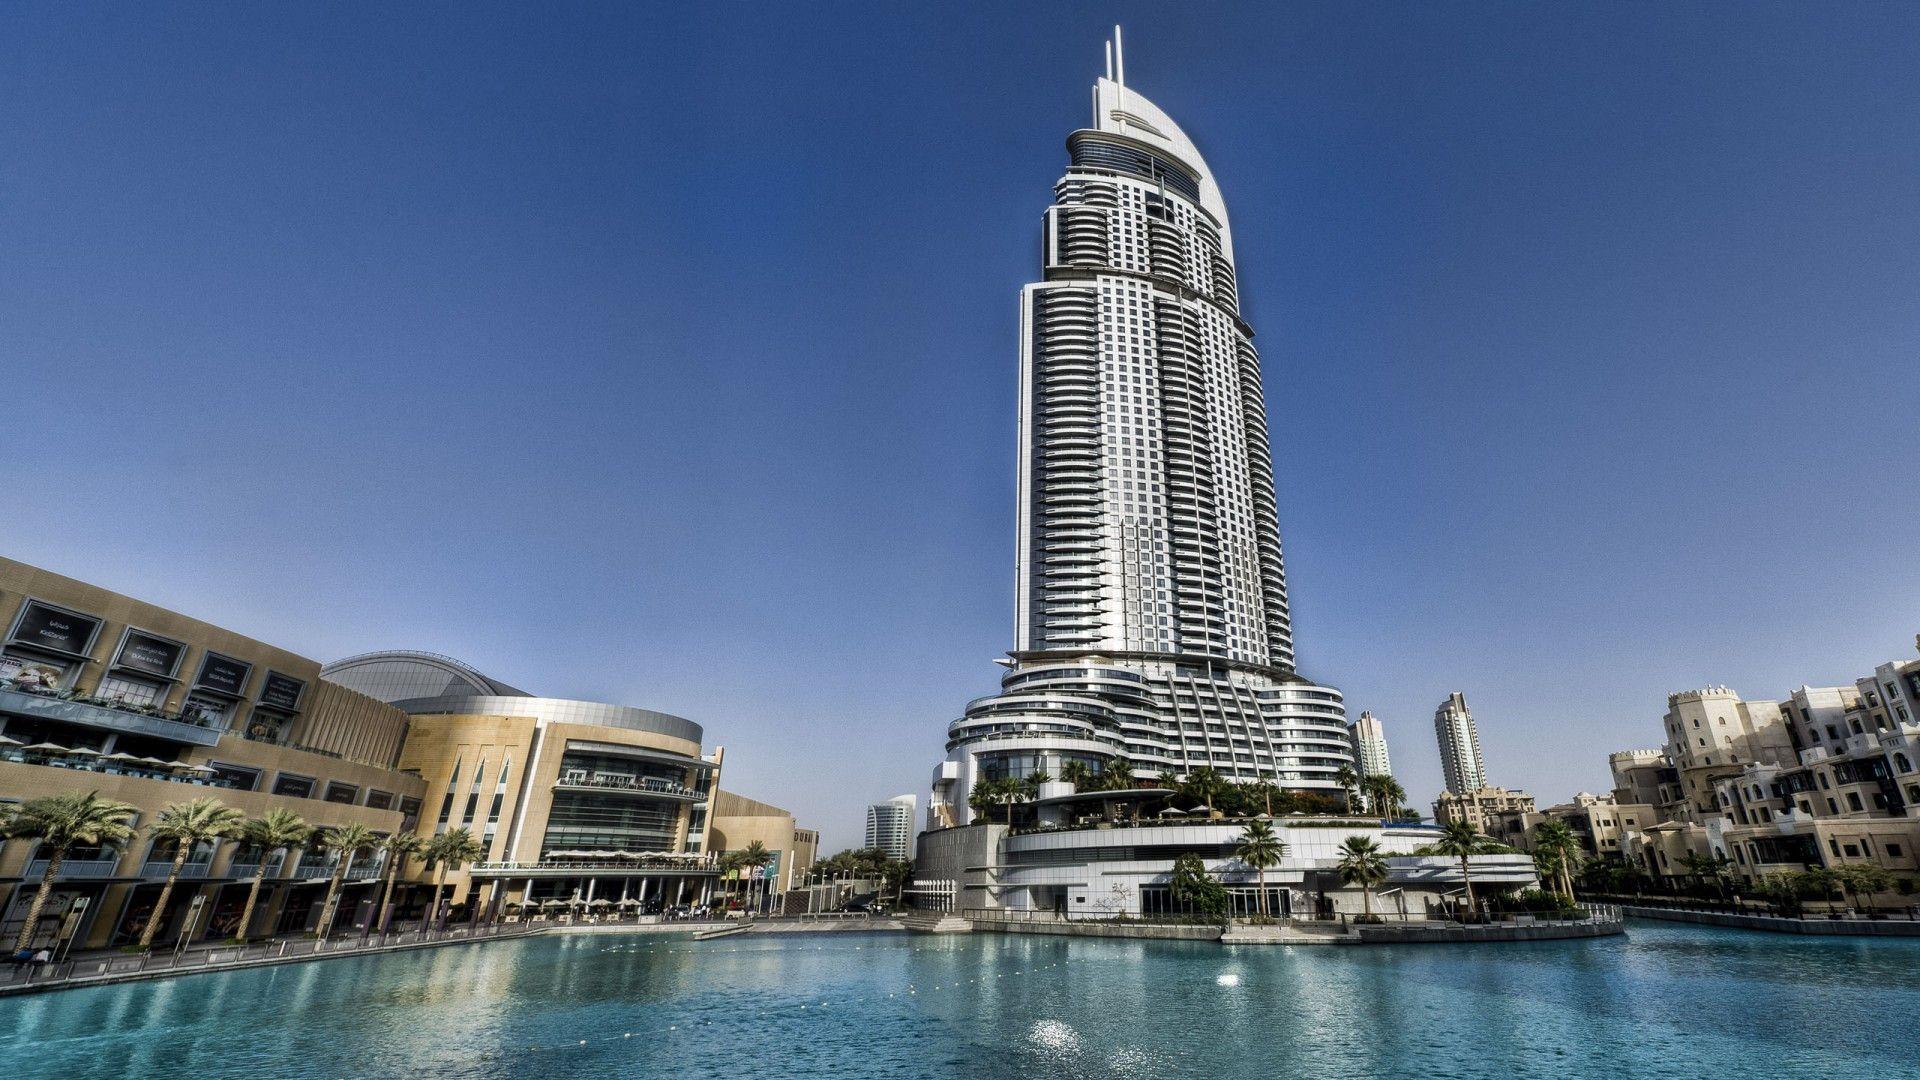 Dubai Mall Wallpapers - Top Free Dubai Mall Backgrounds - WallpaperAccess